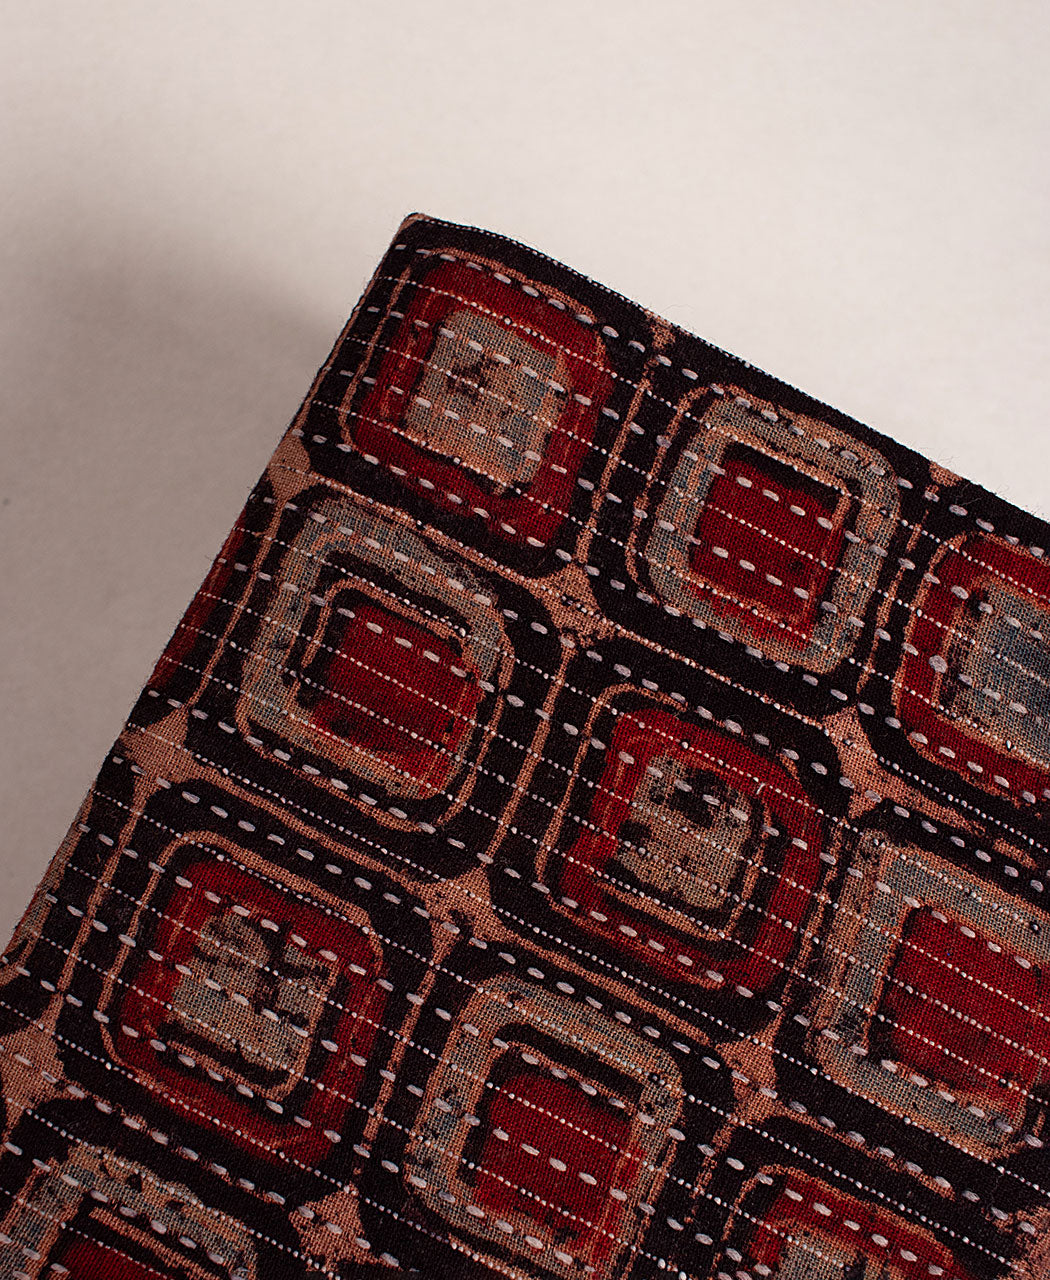 Handmade Kantha Ajrak Hand Block Cotton Fabric Cover Diary